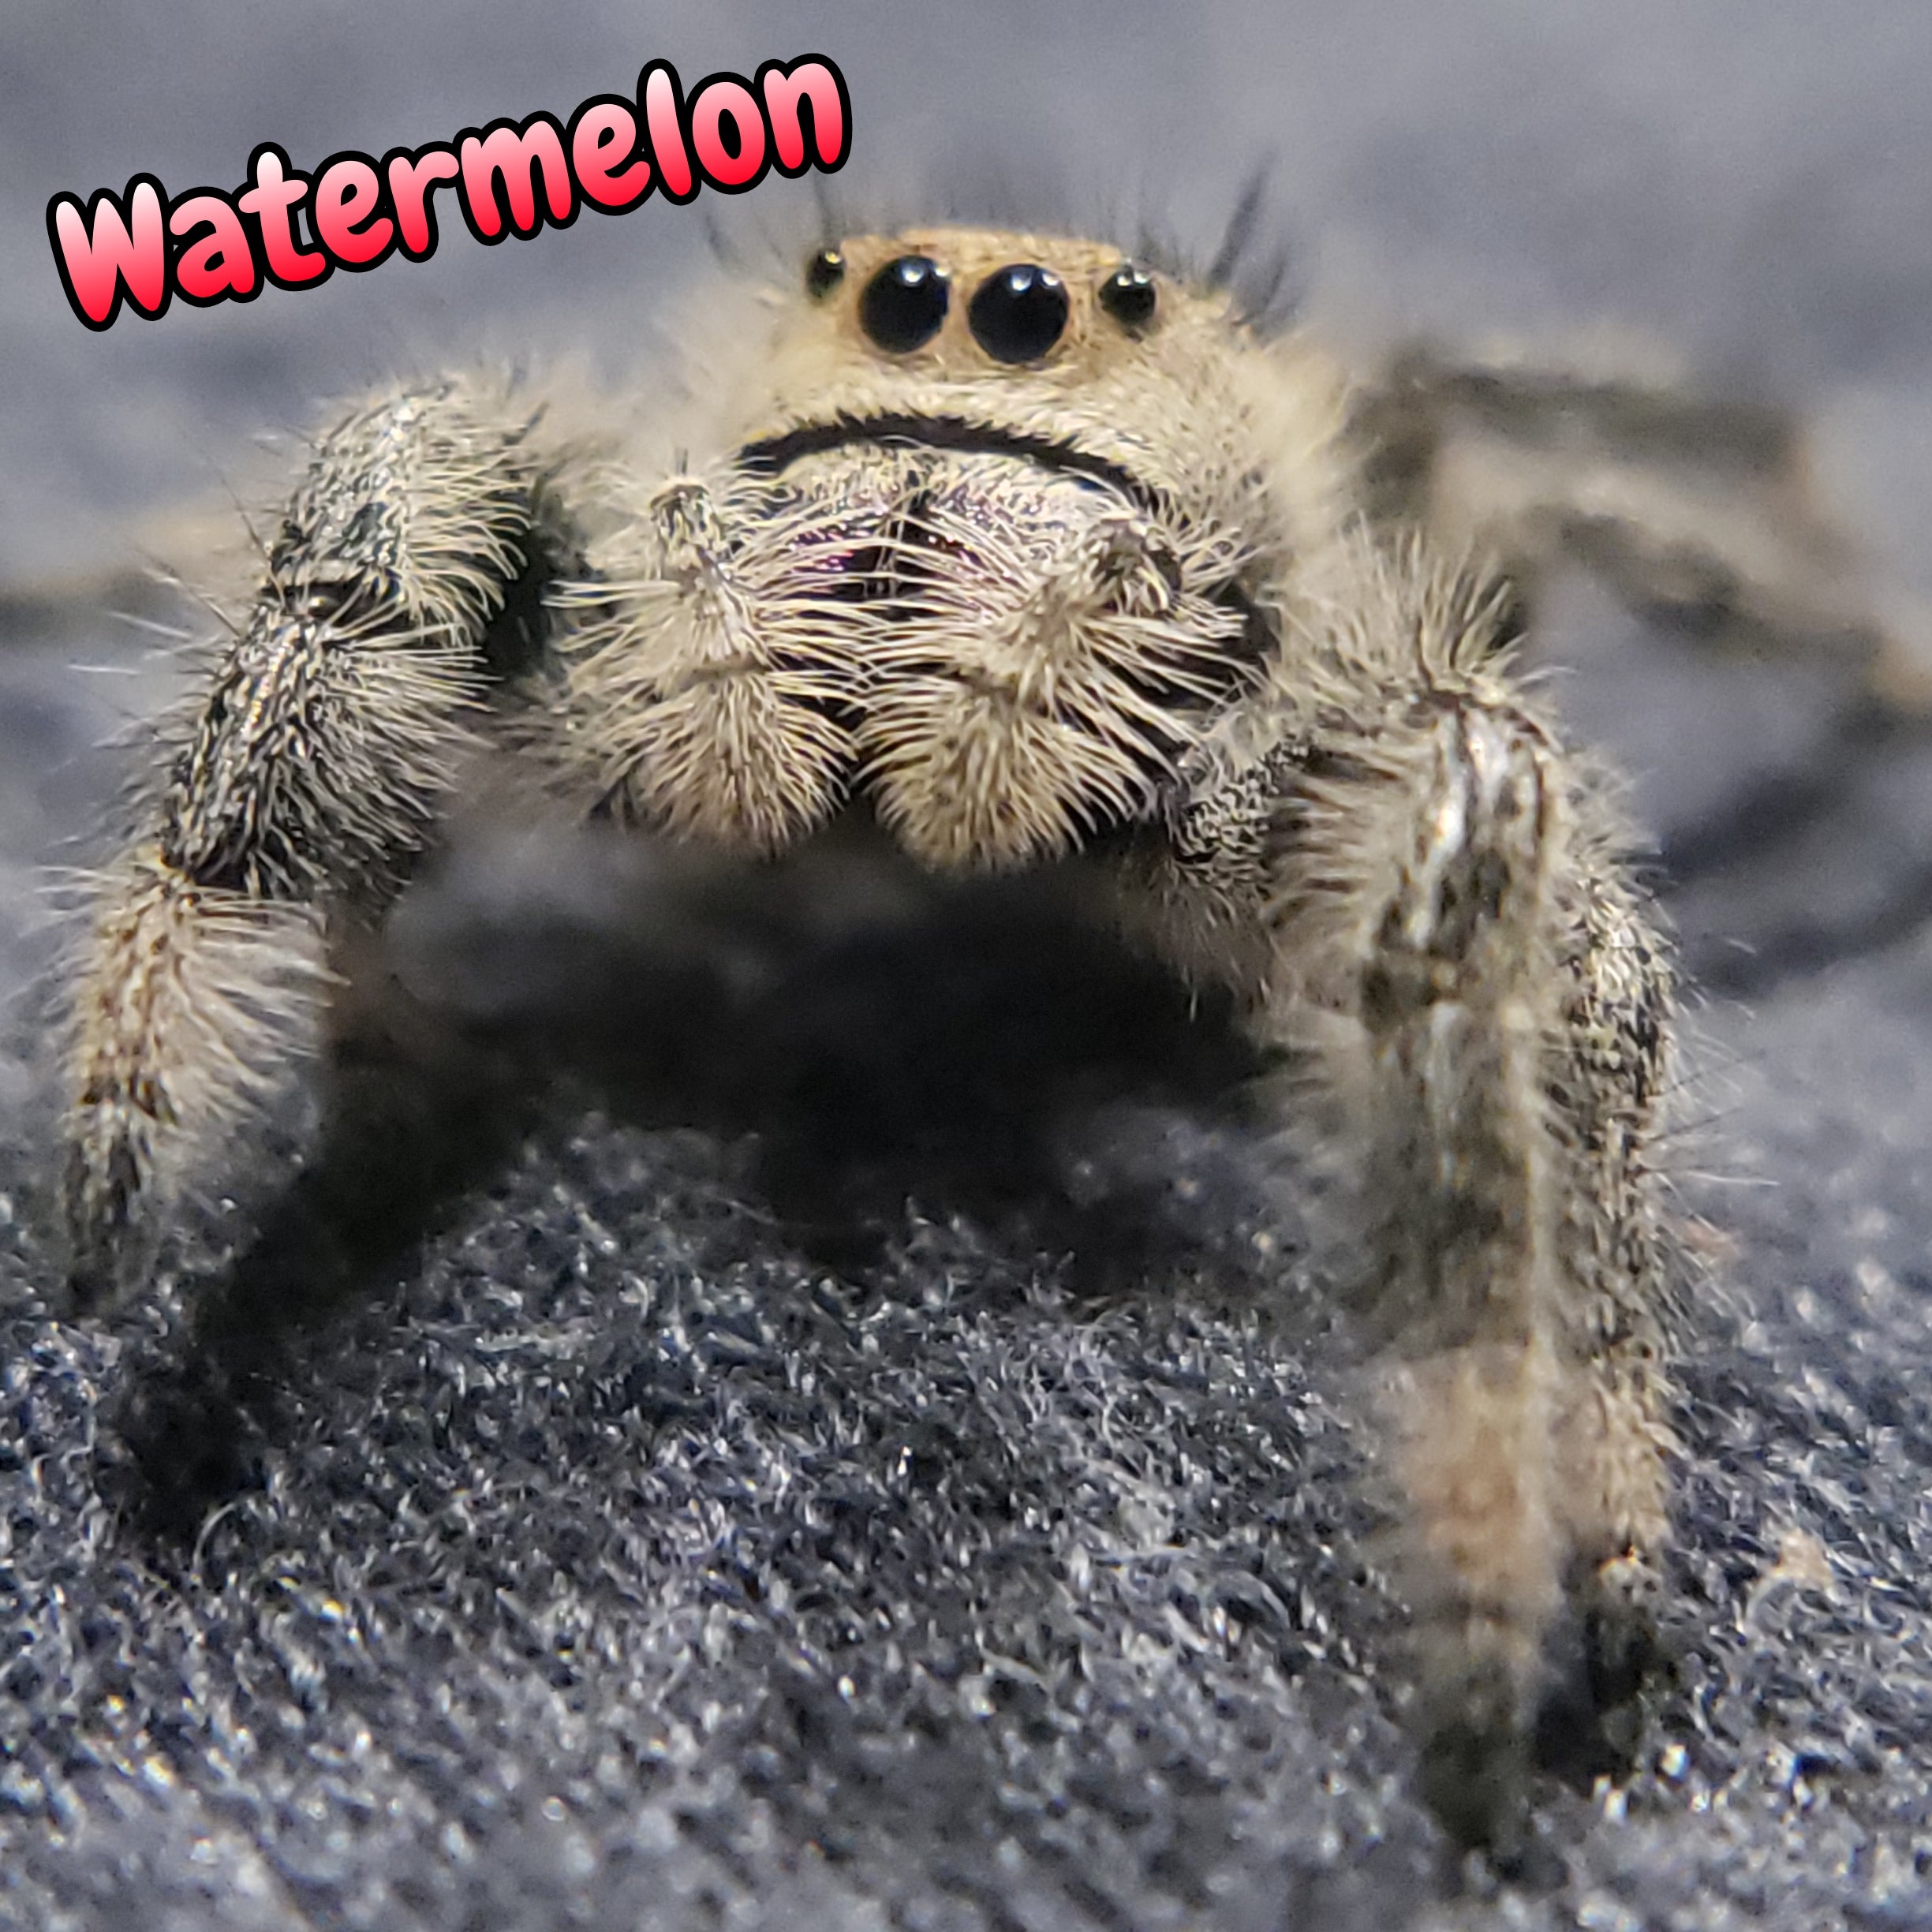 Regal Jumping Spider "Watermelon"